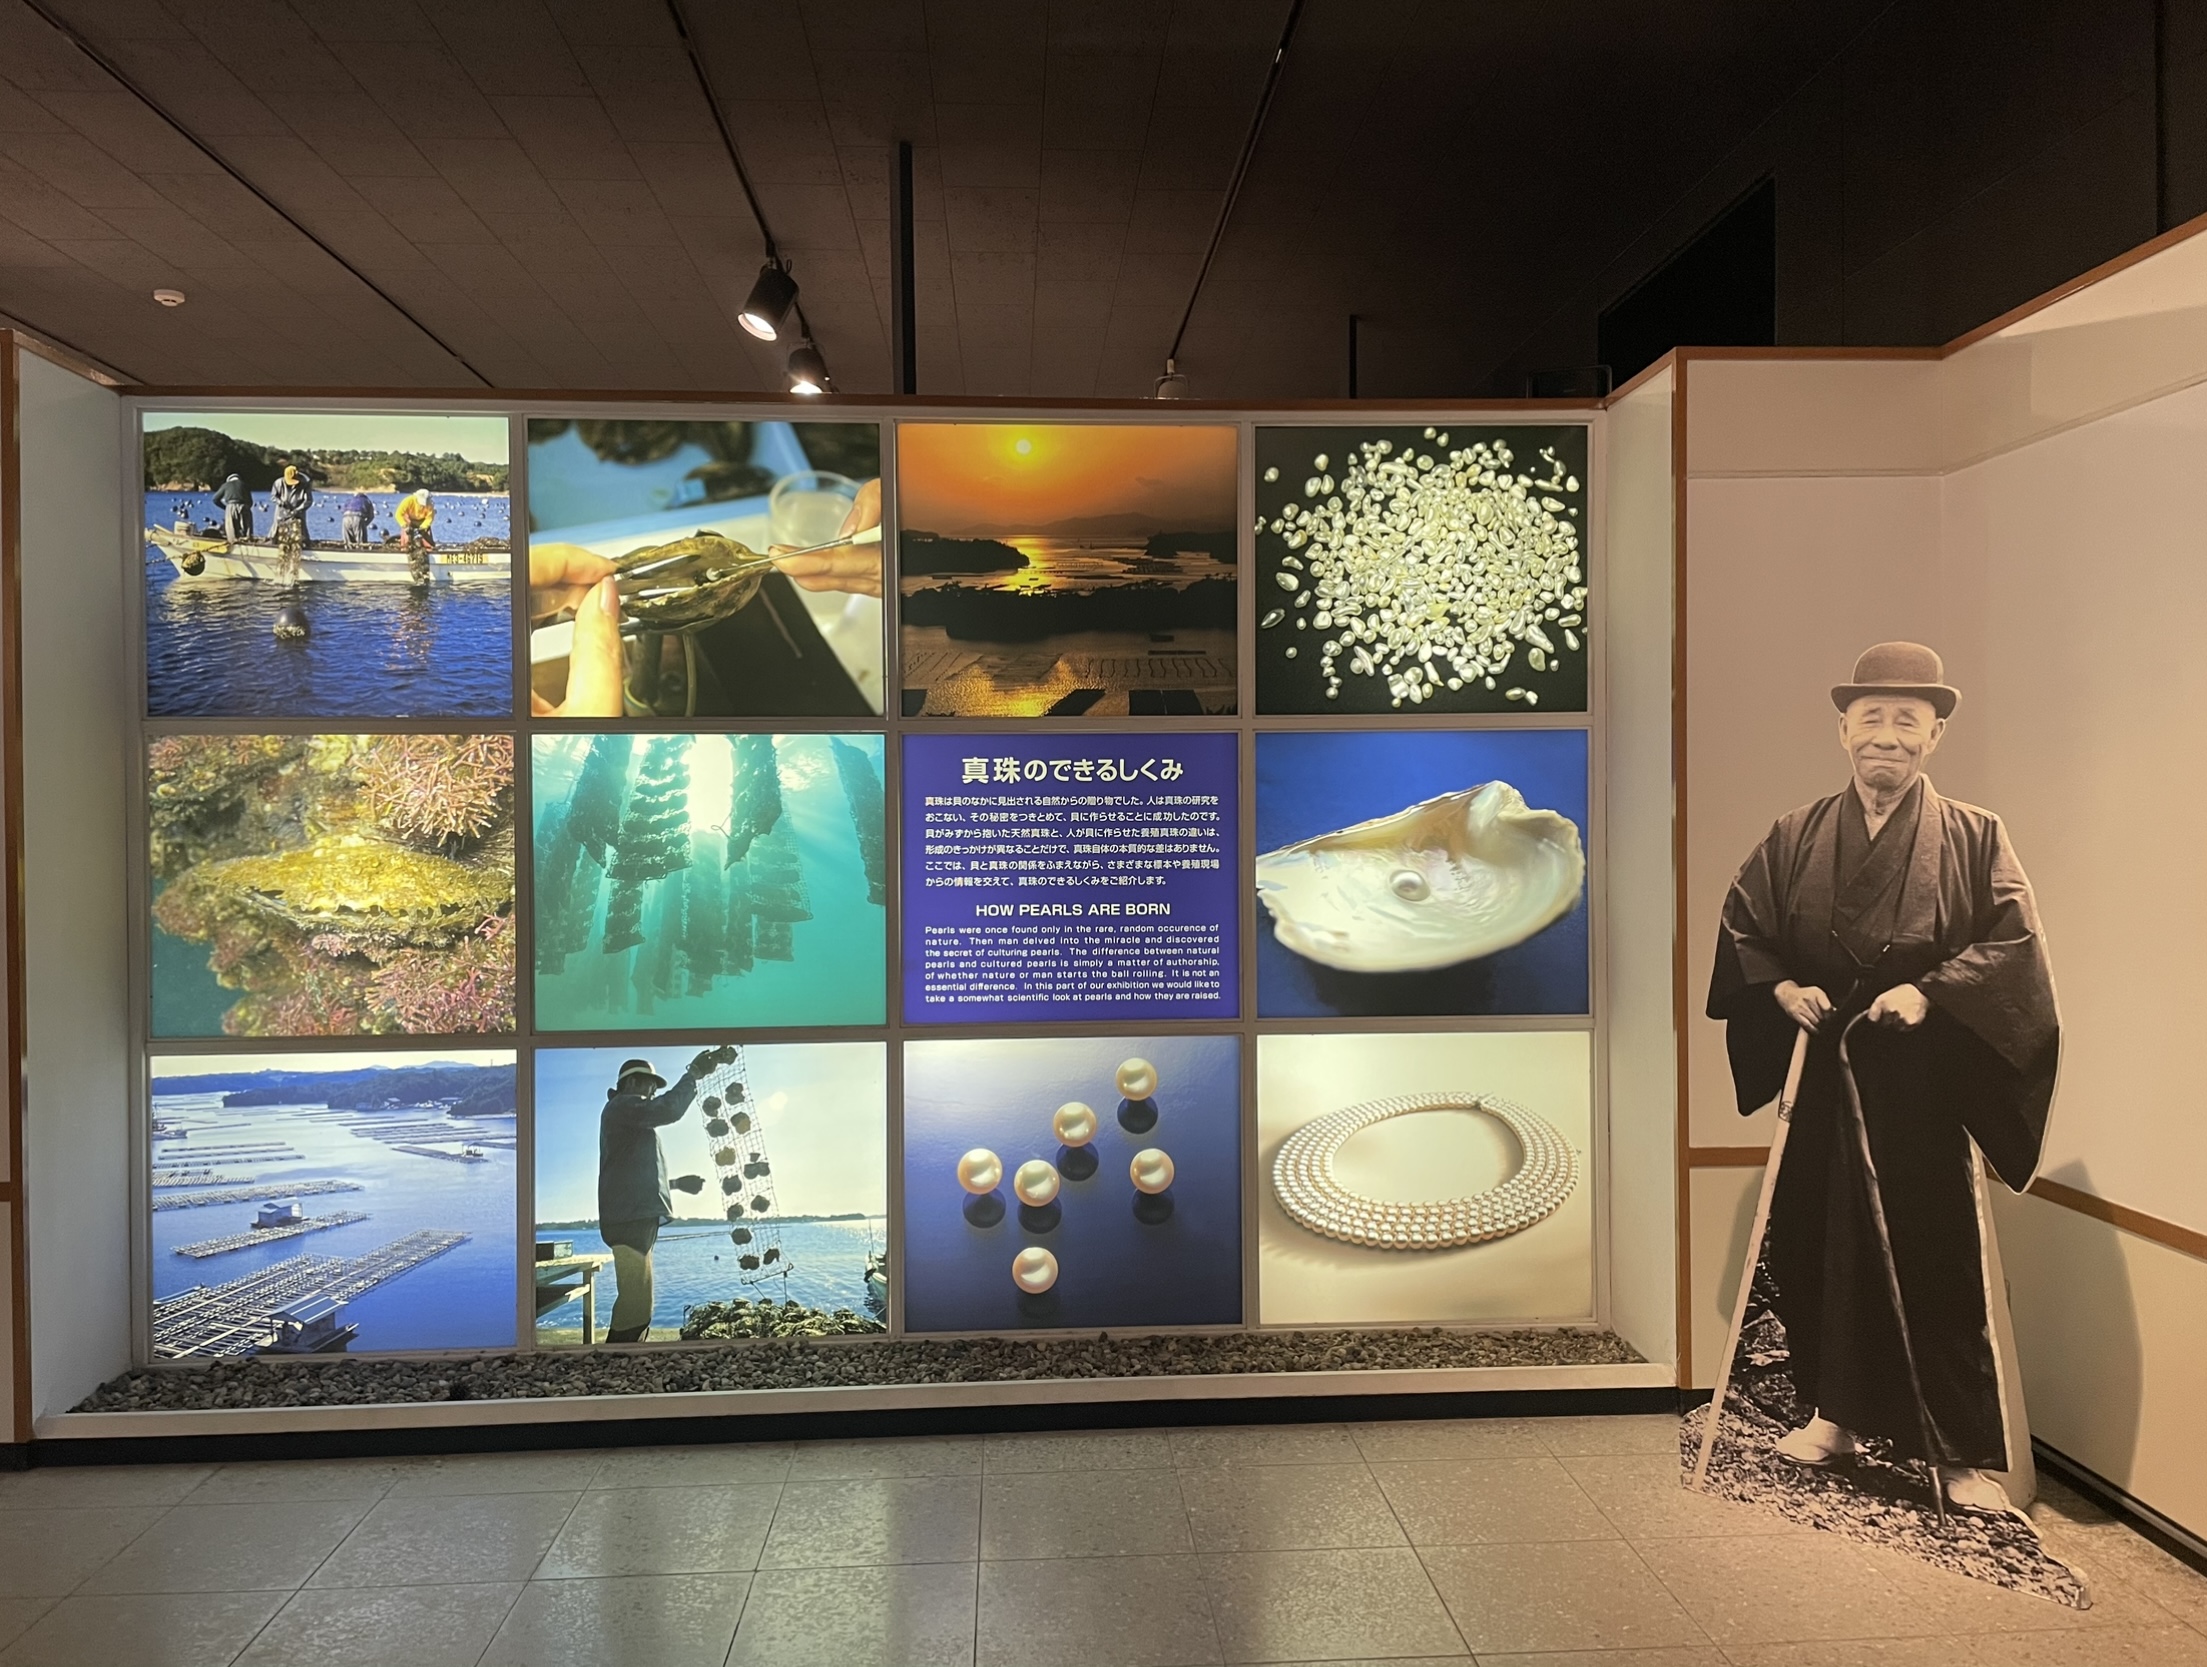 Pearl Farming Photos - Mikimoto Pearl Museum